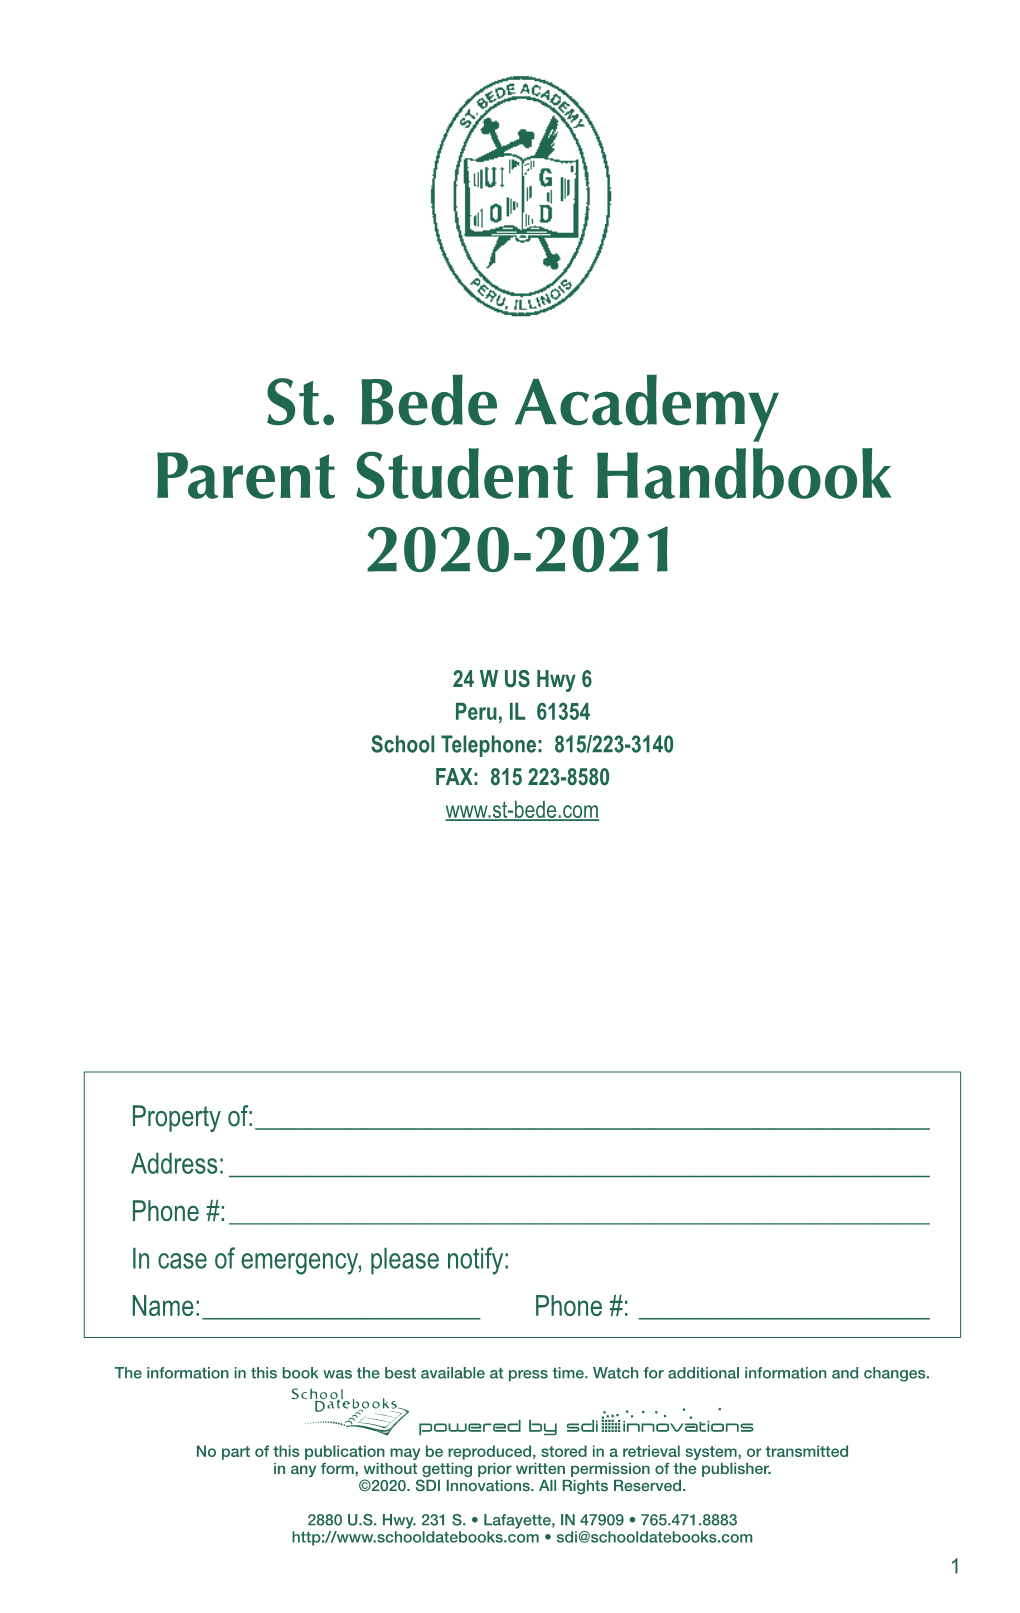 St. Bede Academy Parent Student Handbook 2020-2021